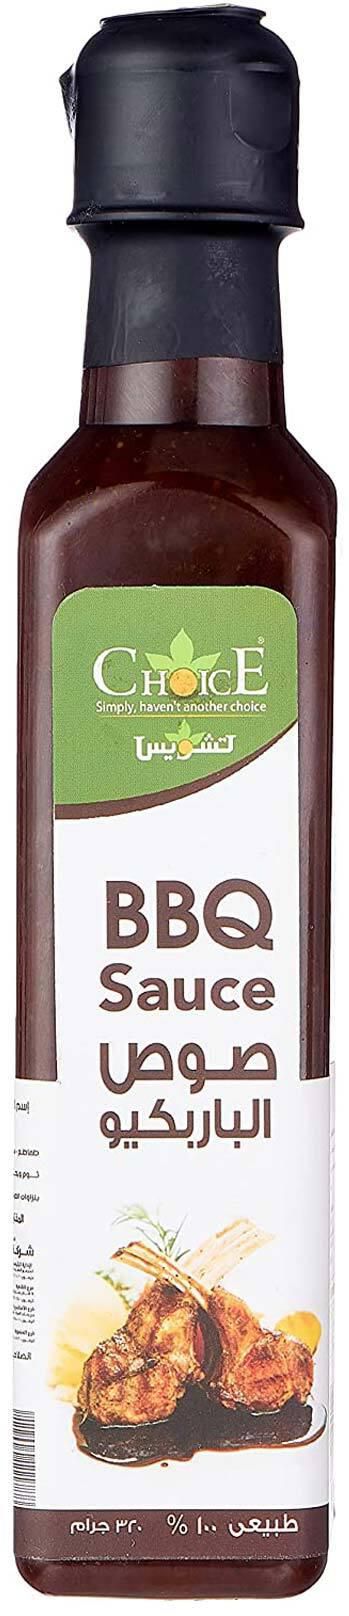 Choice BBQ Sauce - 300gm